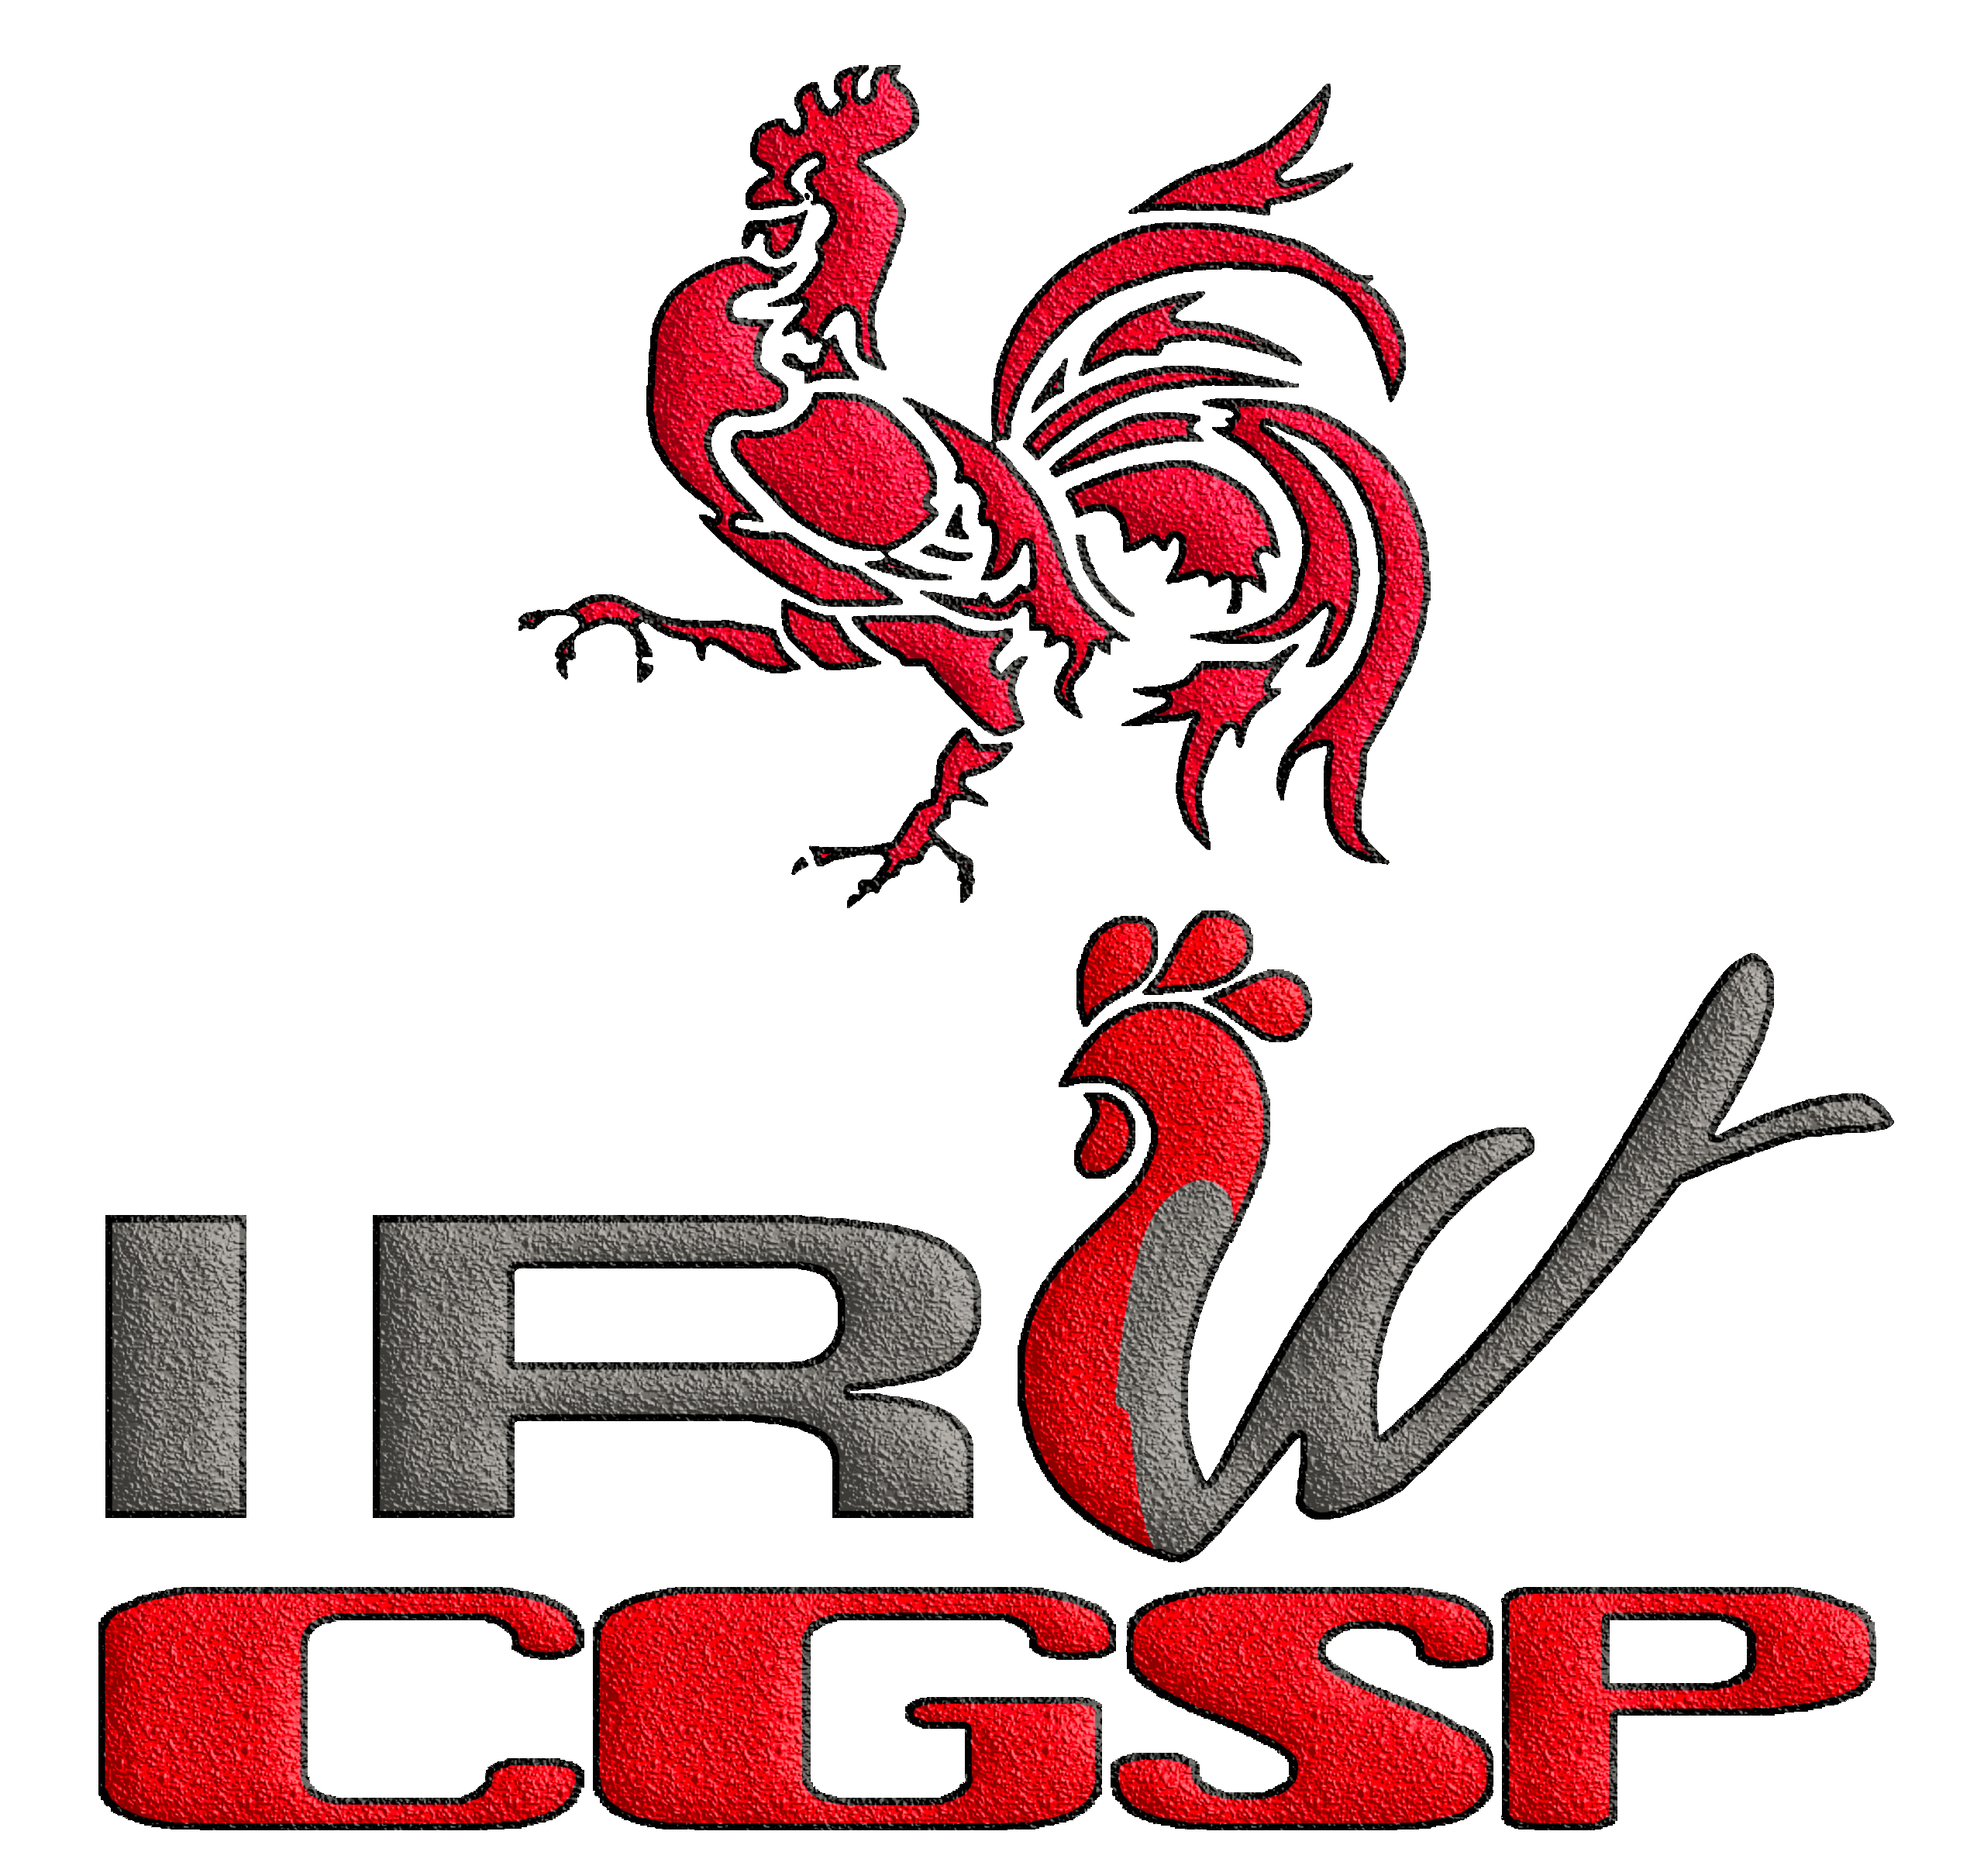 Logo CGSP